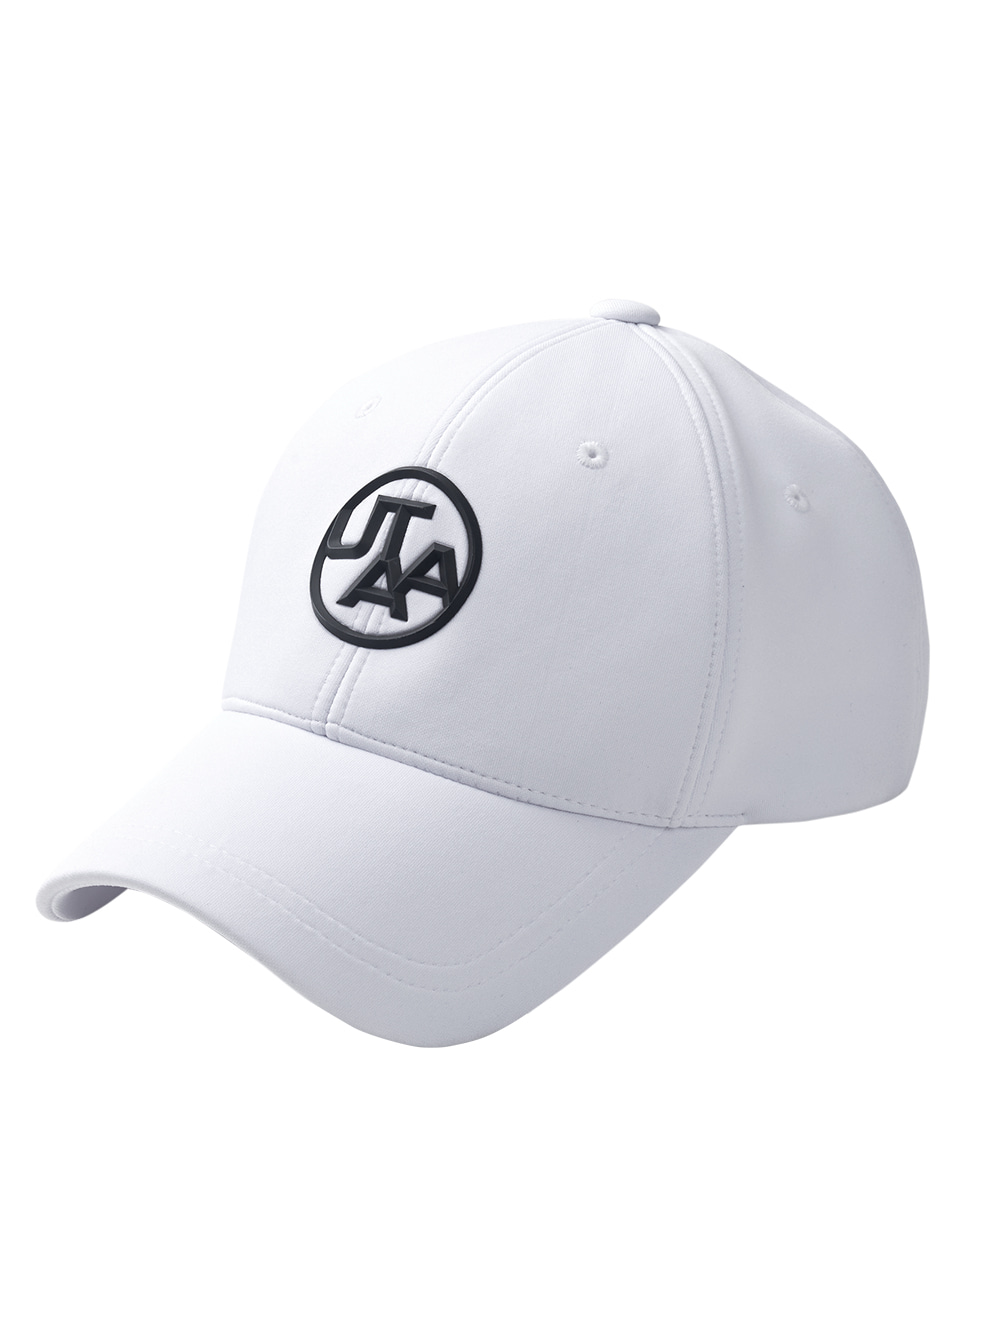 UTAA Figure Symbol Cushion Golf cap : White (UD0GCU530WH)